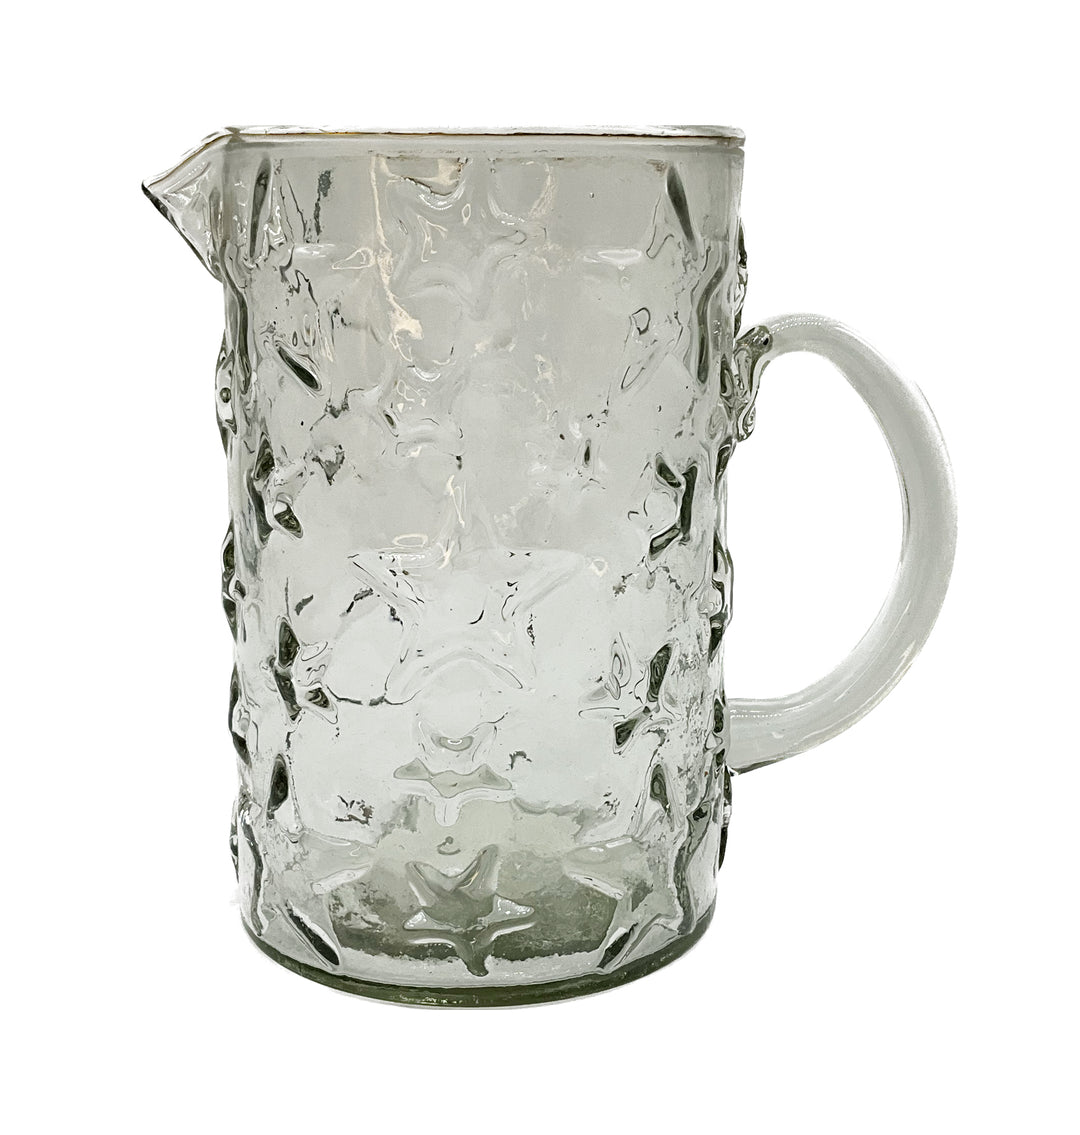 Glass star jug - Large